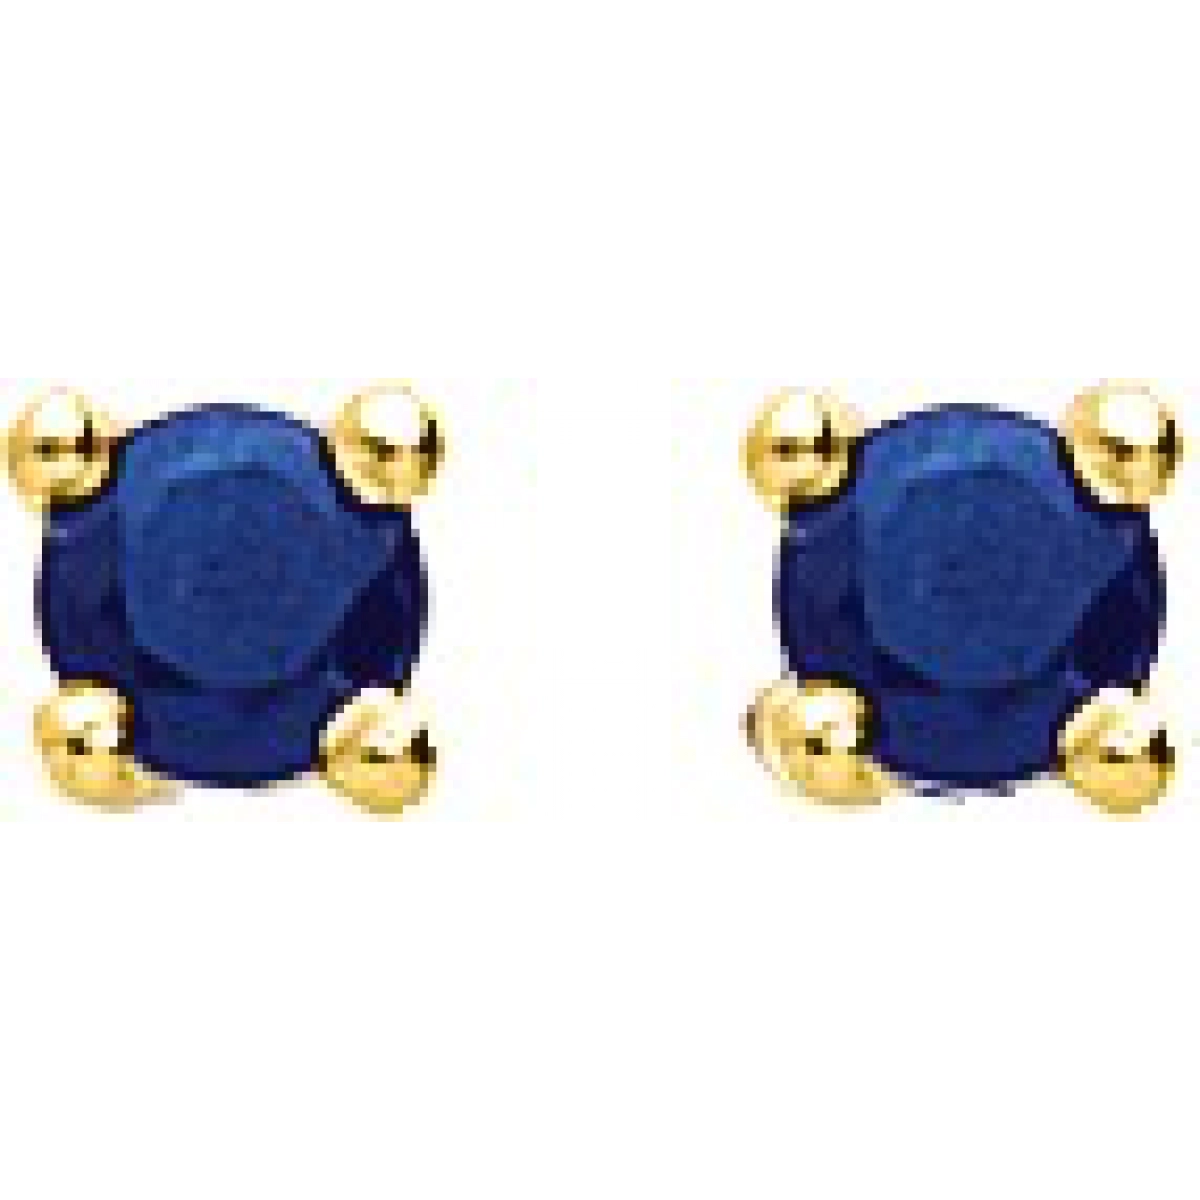 Earrings pair w. sapphire 4mm 18K YG  Lua Blanca  1806S.0